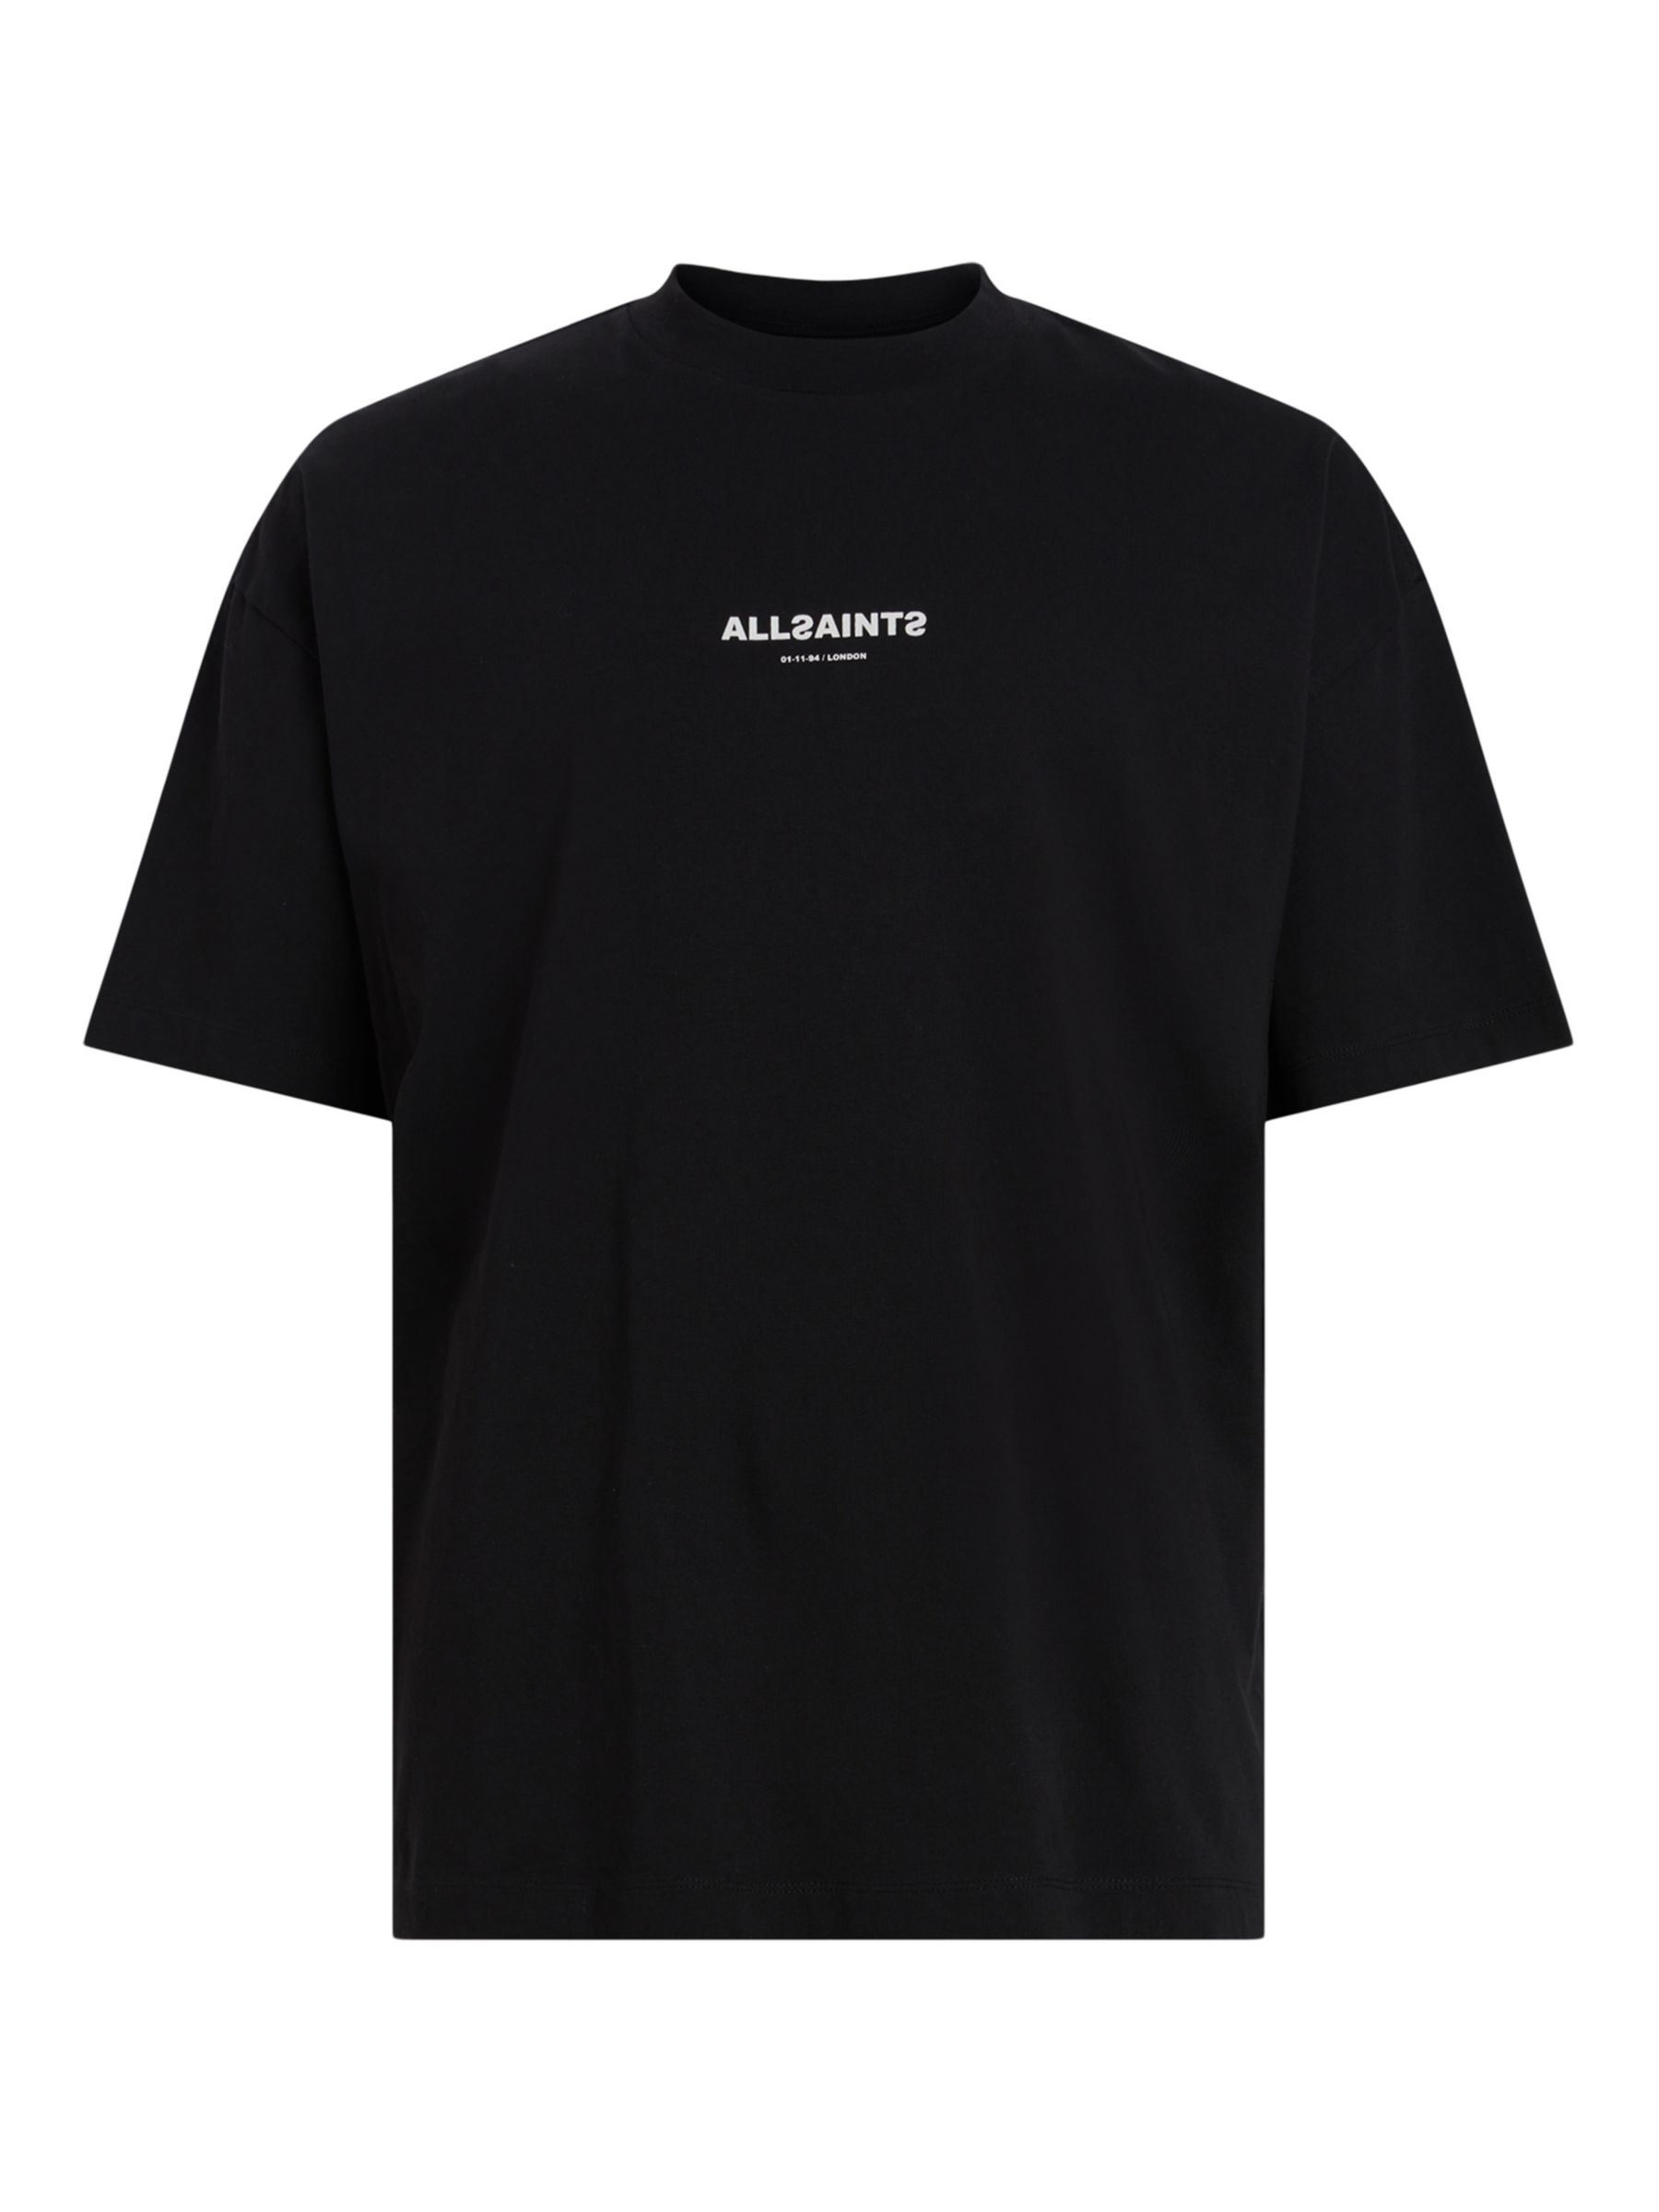 AllSaints Subverse T-Shirt, Jet Black at John Lewis & Partners